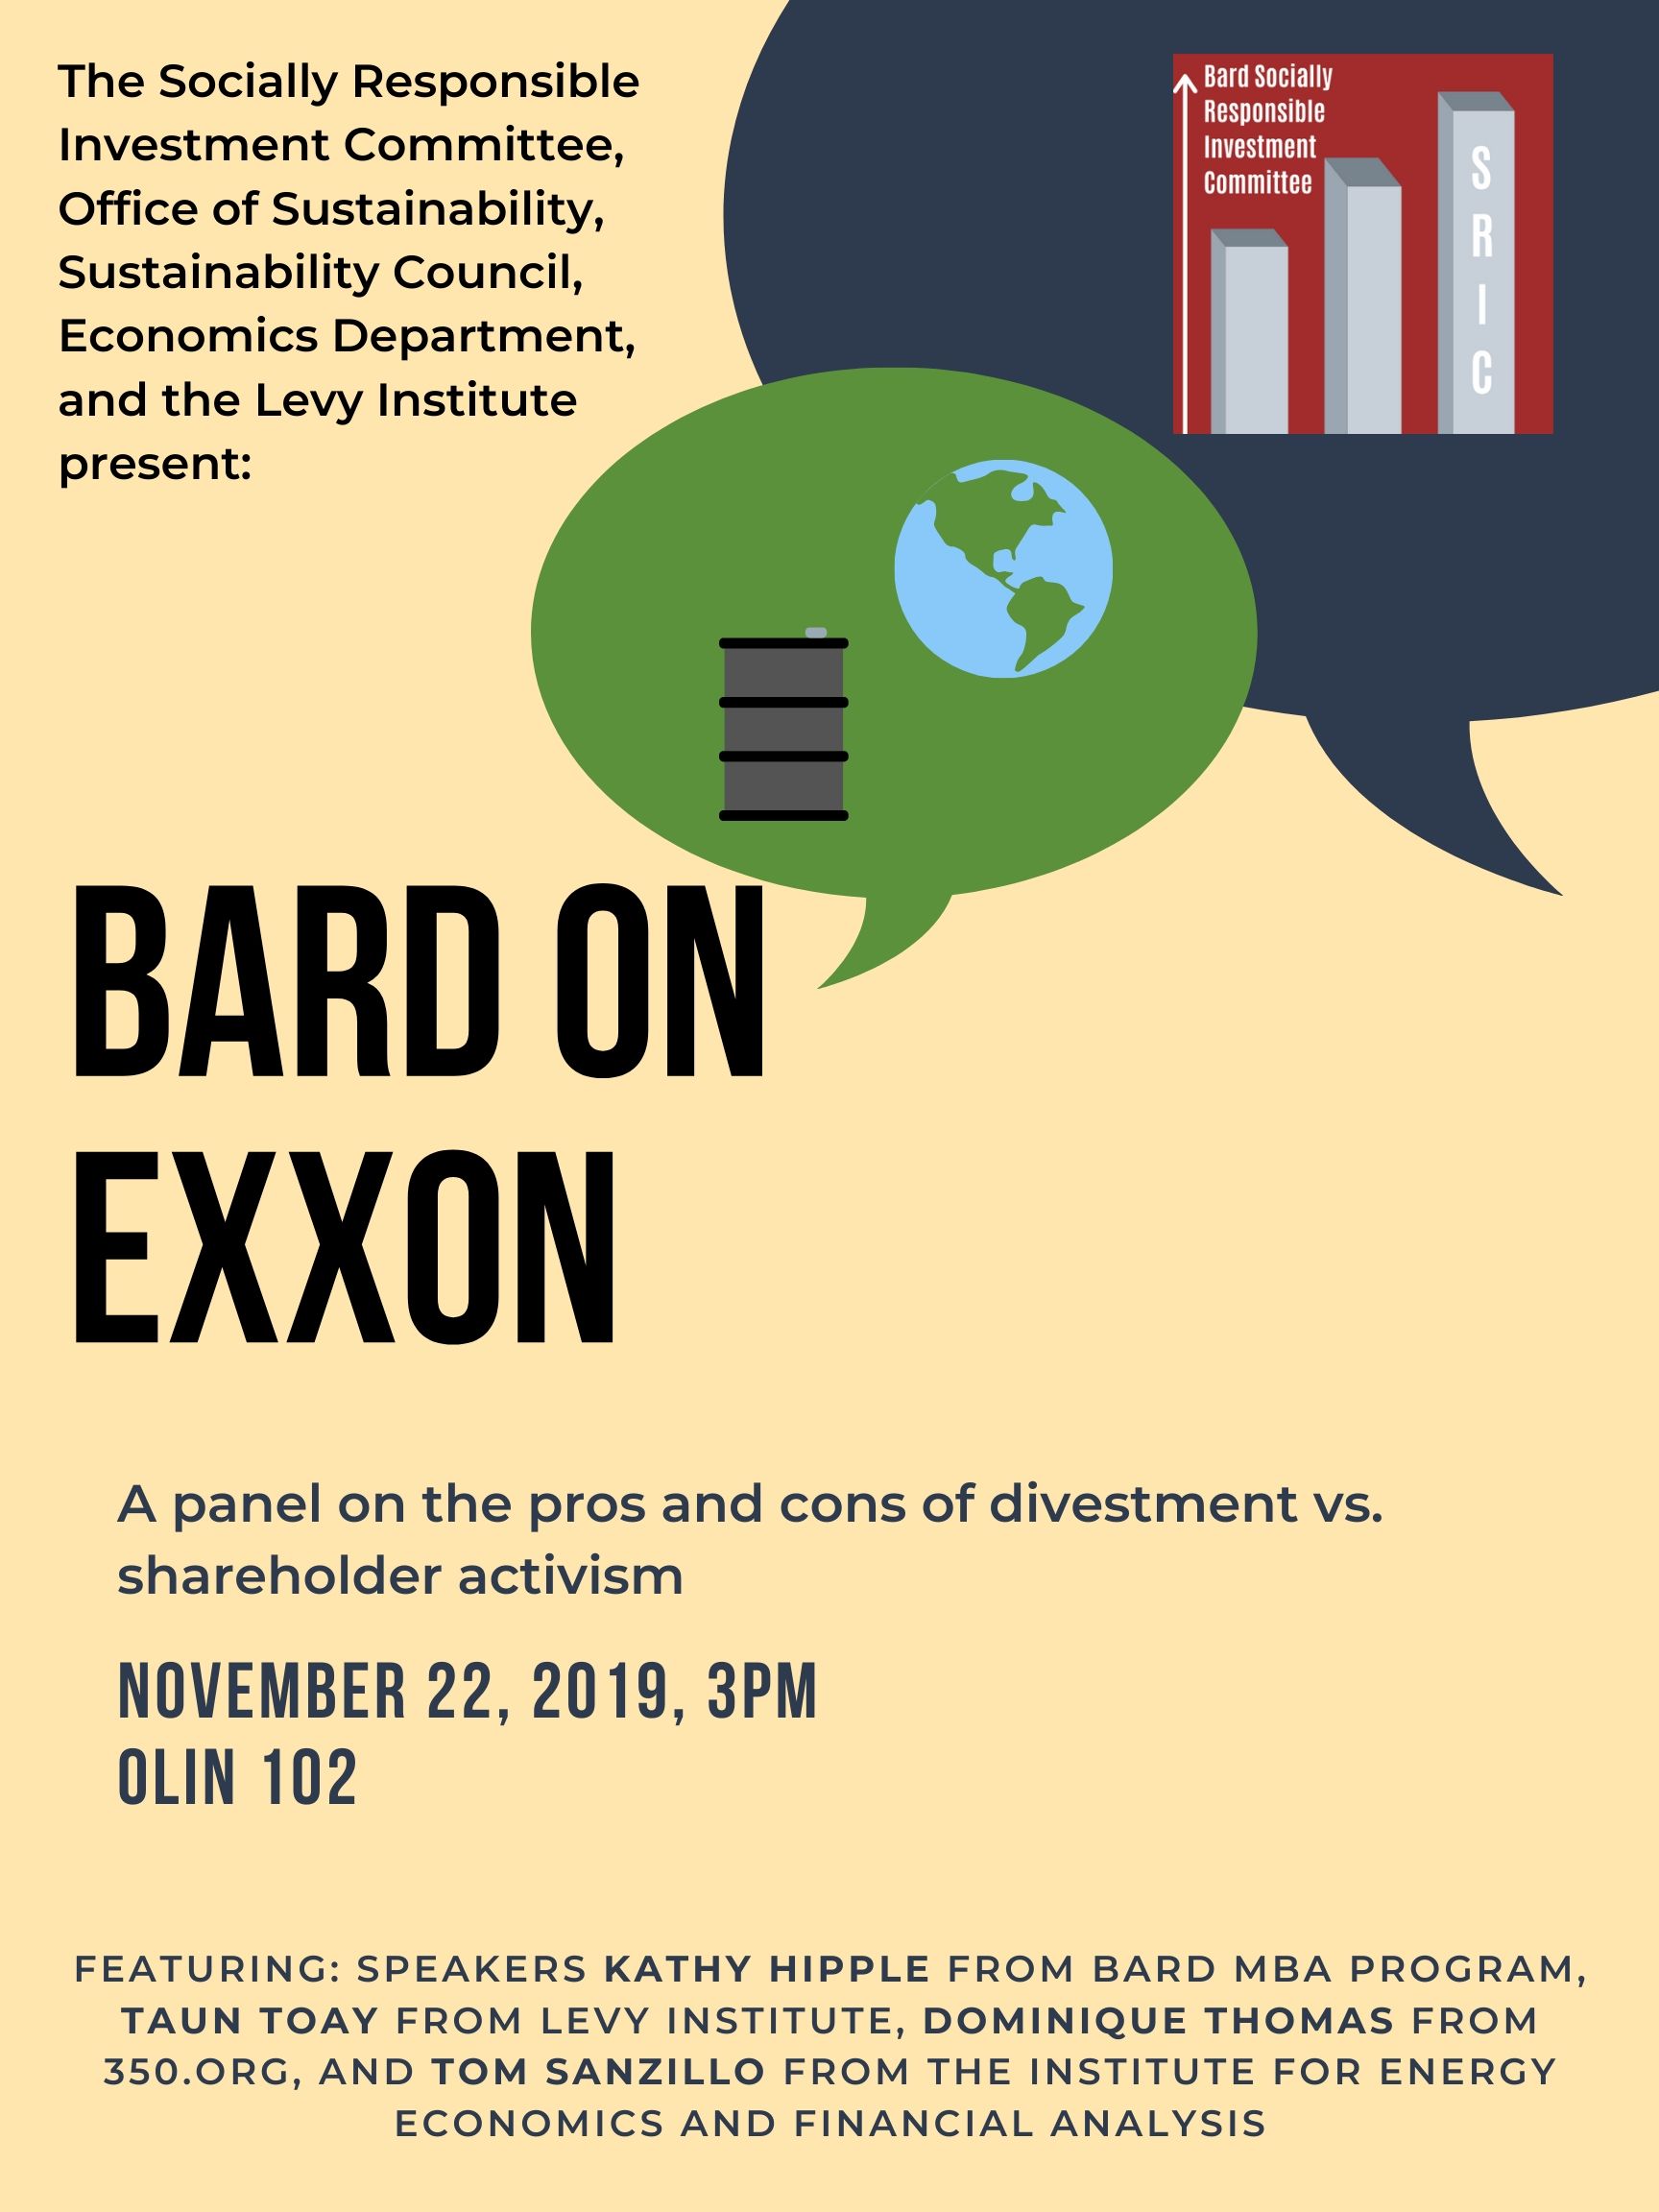 Bard on Exxon